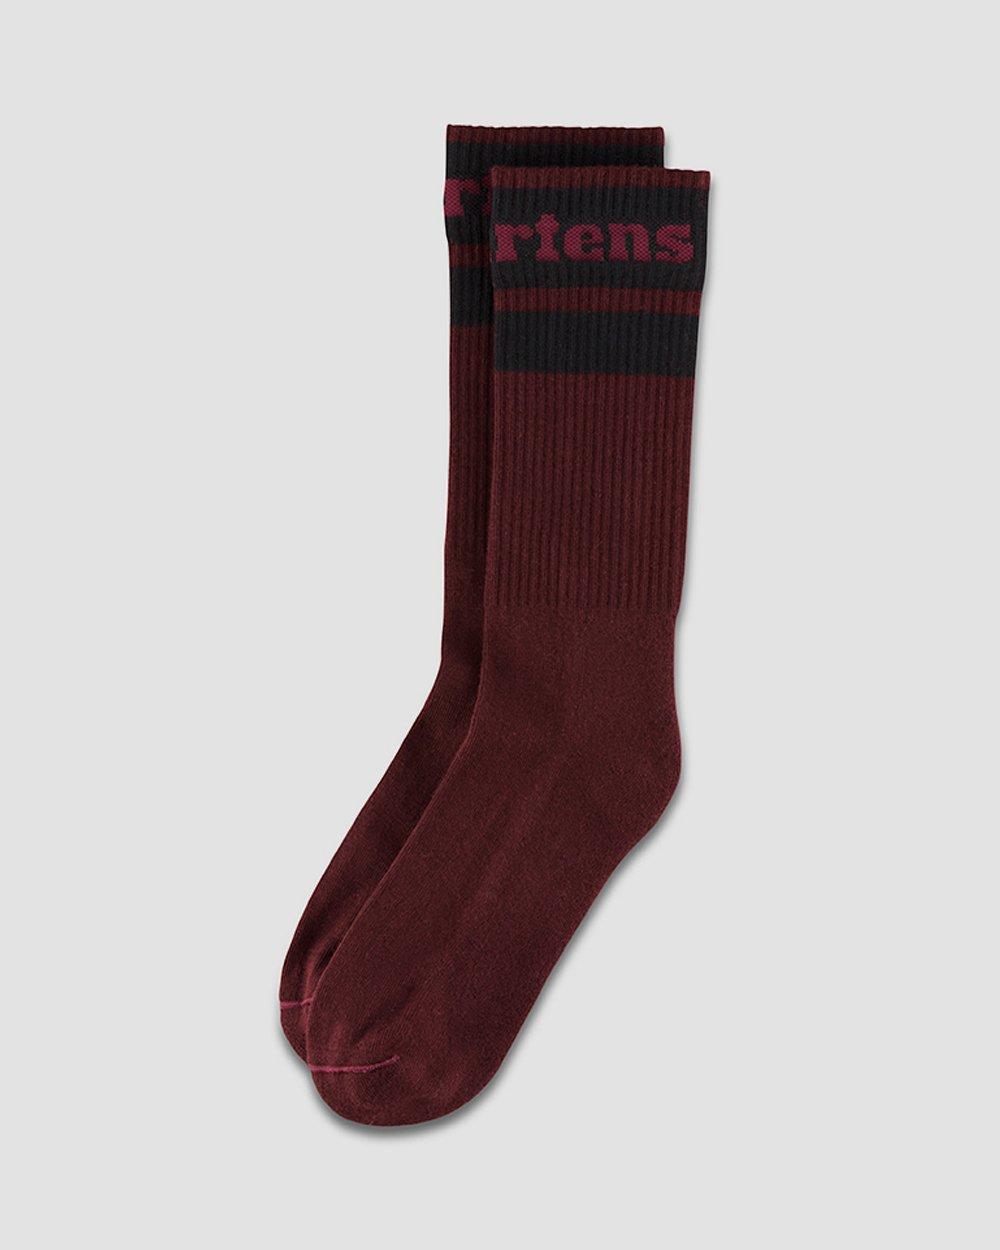 Athletic Socks in Cherry Red+Black